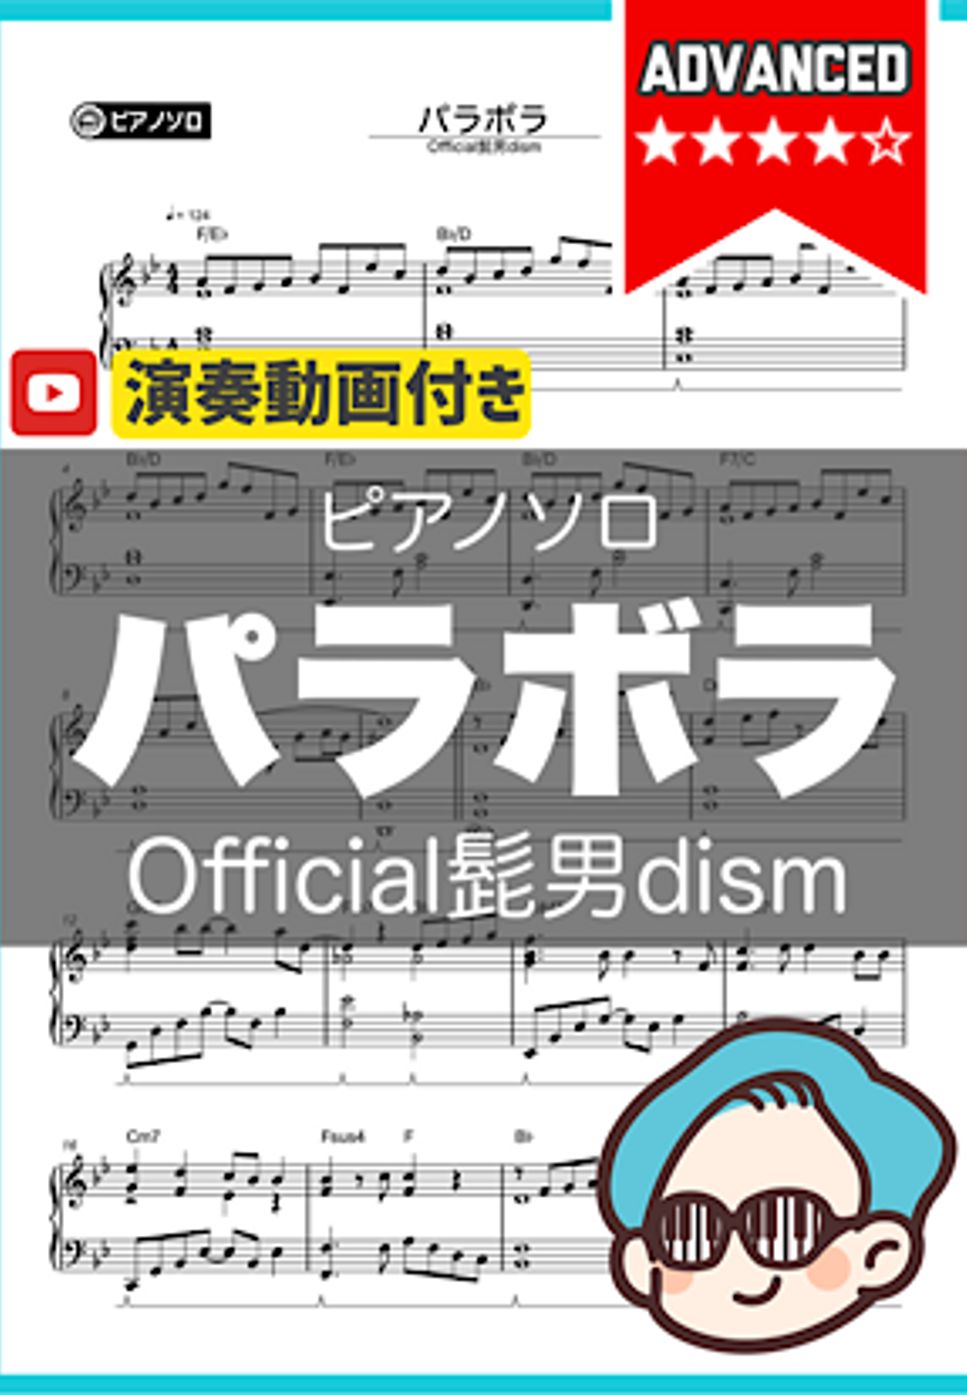 Official髭男dism - パラボラ by シータピアノ